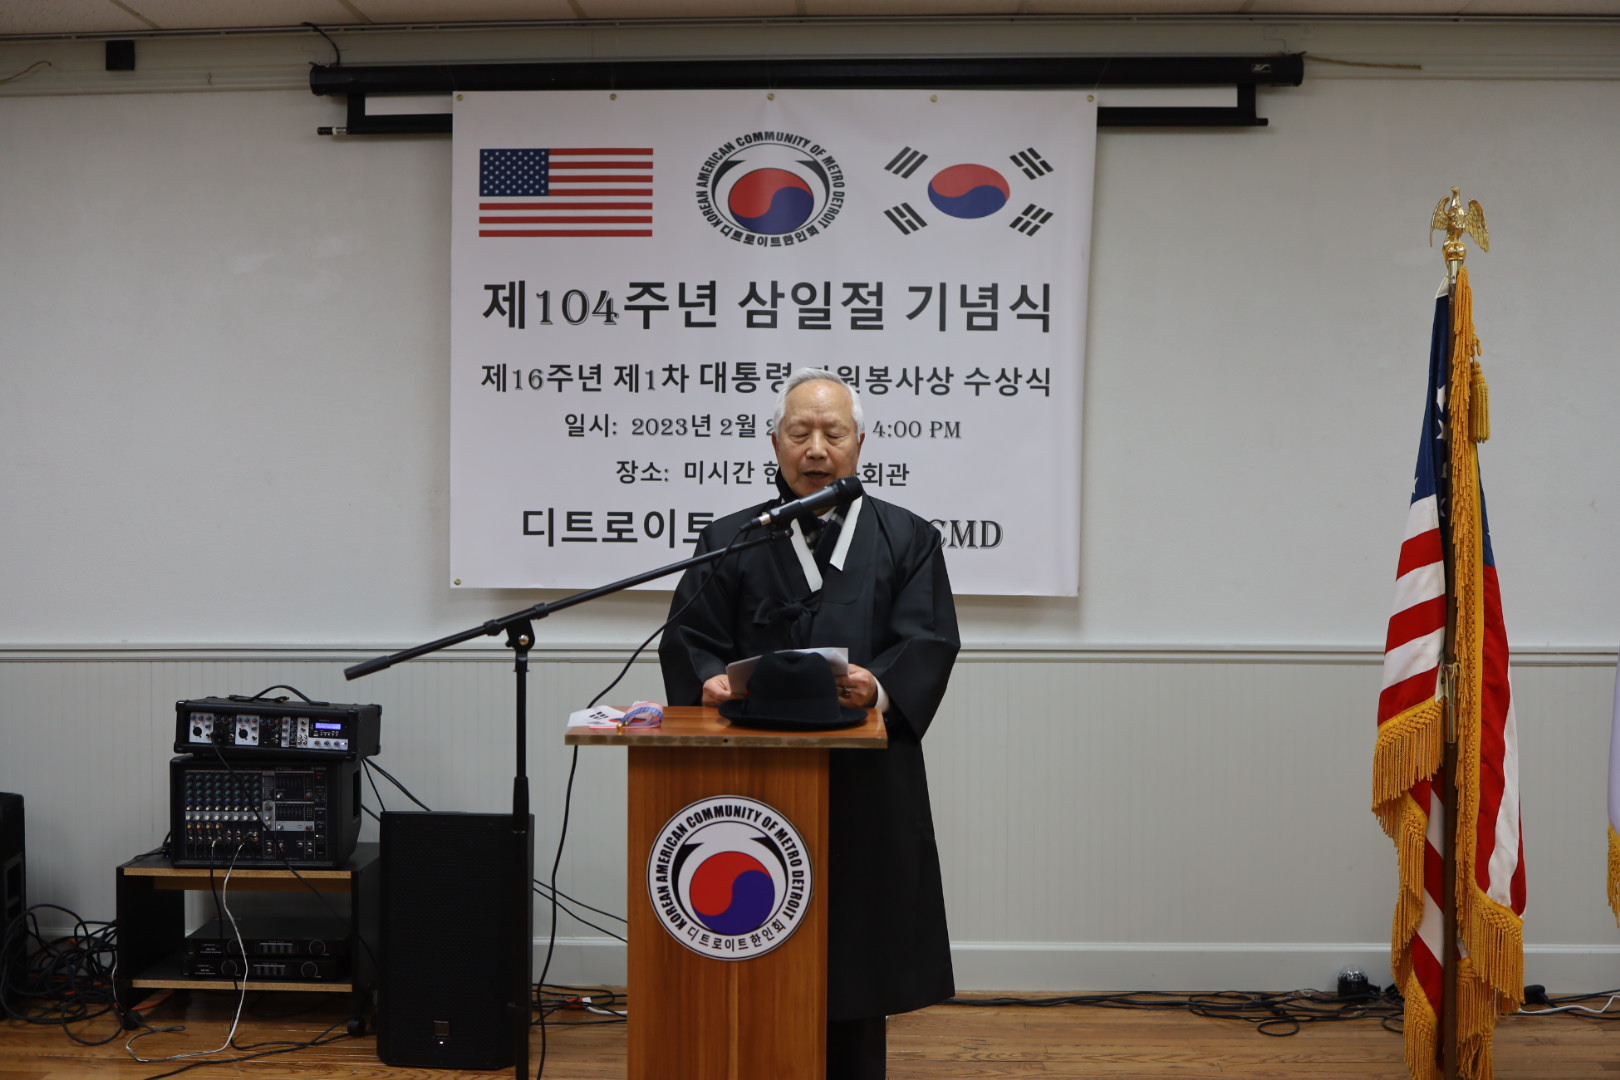 KACCM Director Kim Byeong-jun gives a congratulatory address